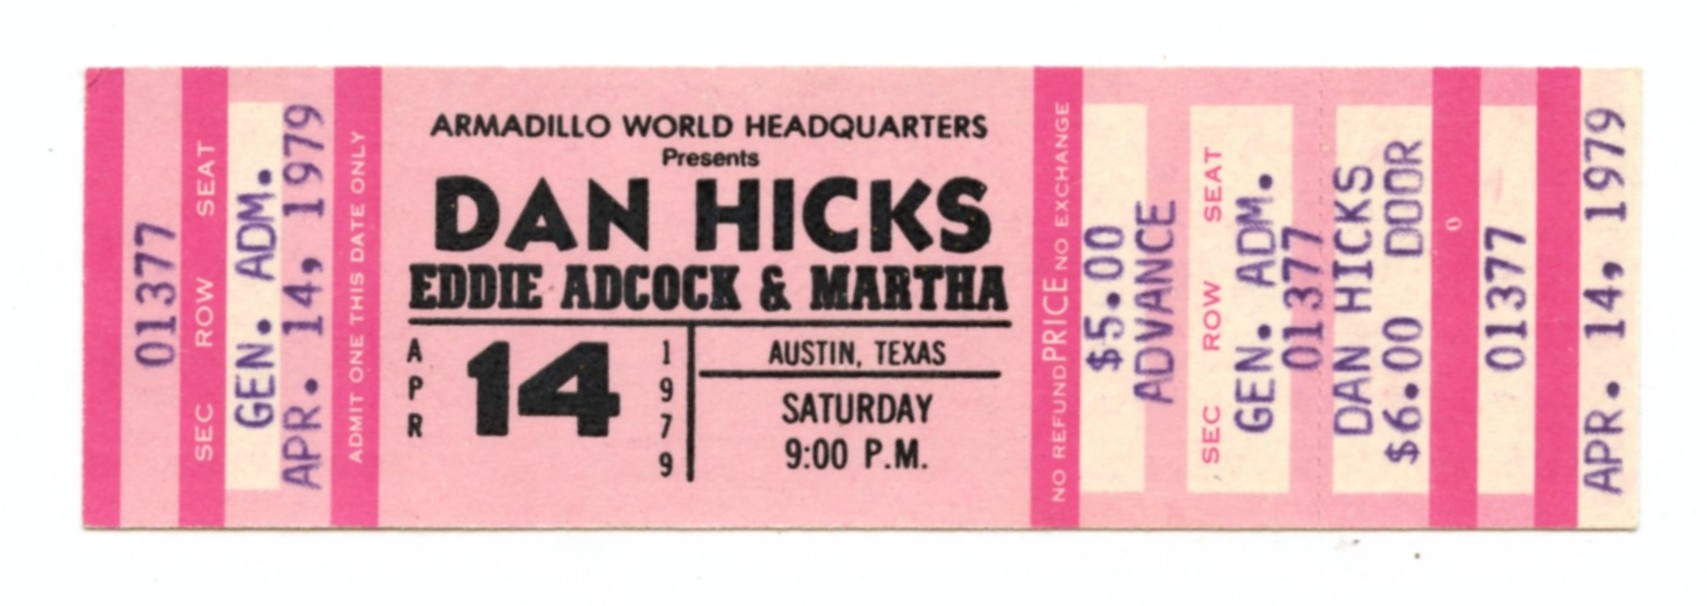 Dan Hicks Vintage Ticket 1979 Apr 14 Austin TX 